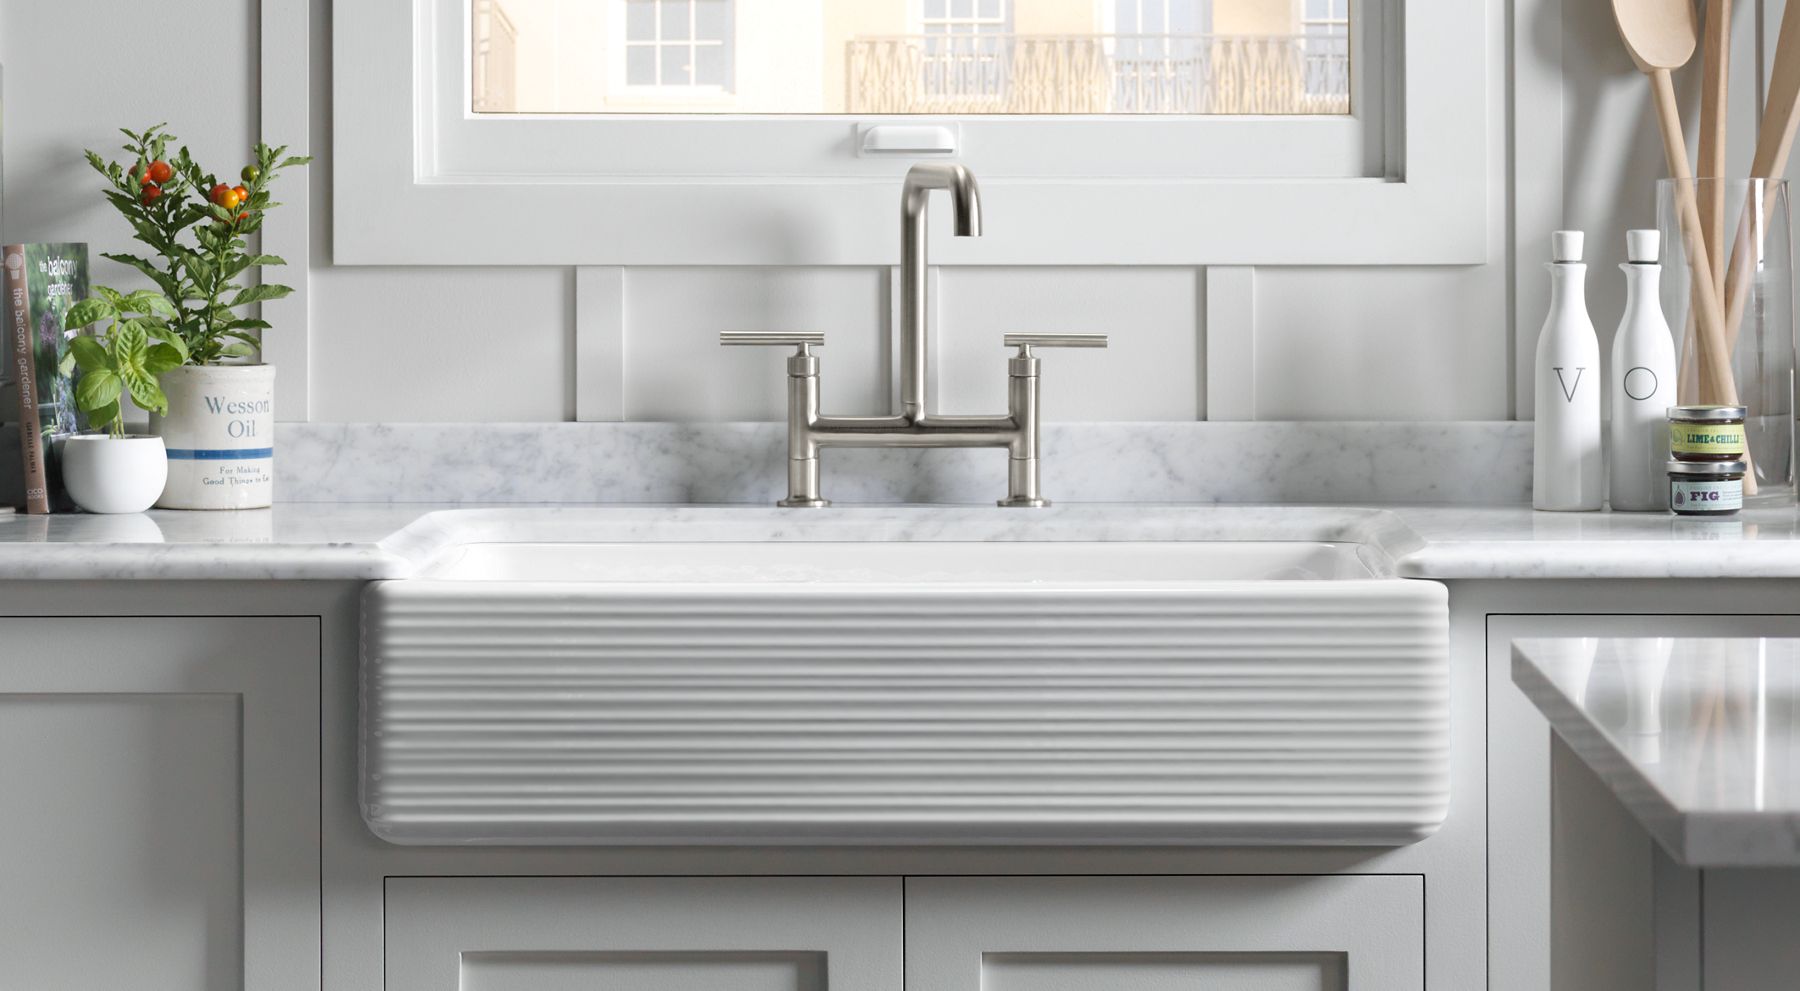 Kitchen Sink Configuration Type Buyer S Guide Kohler